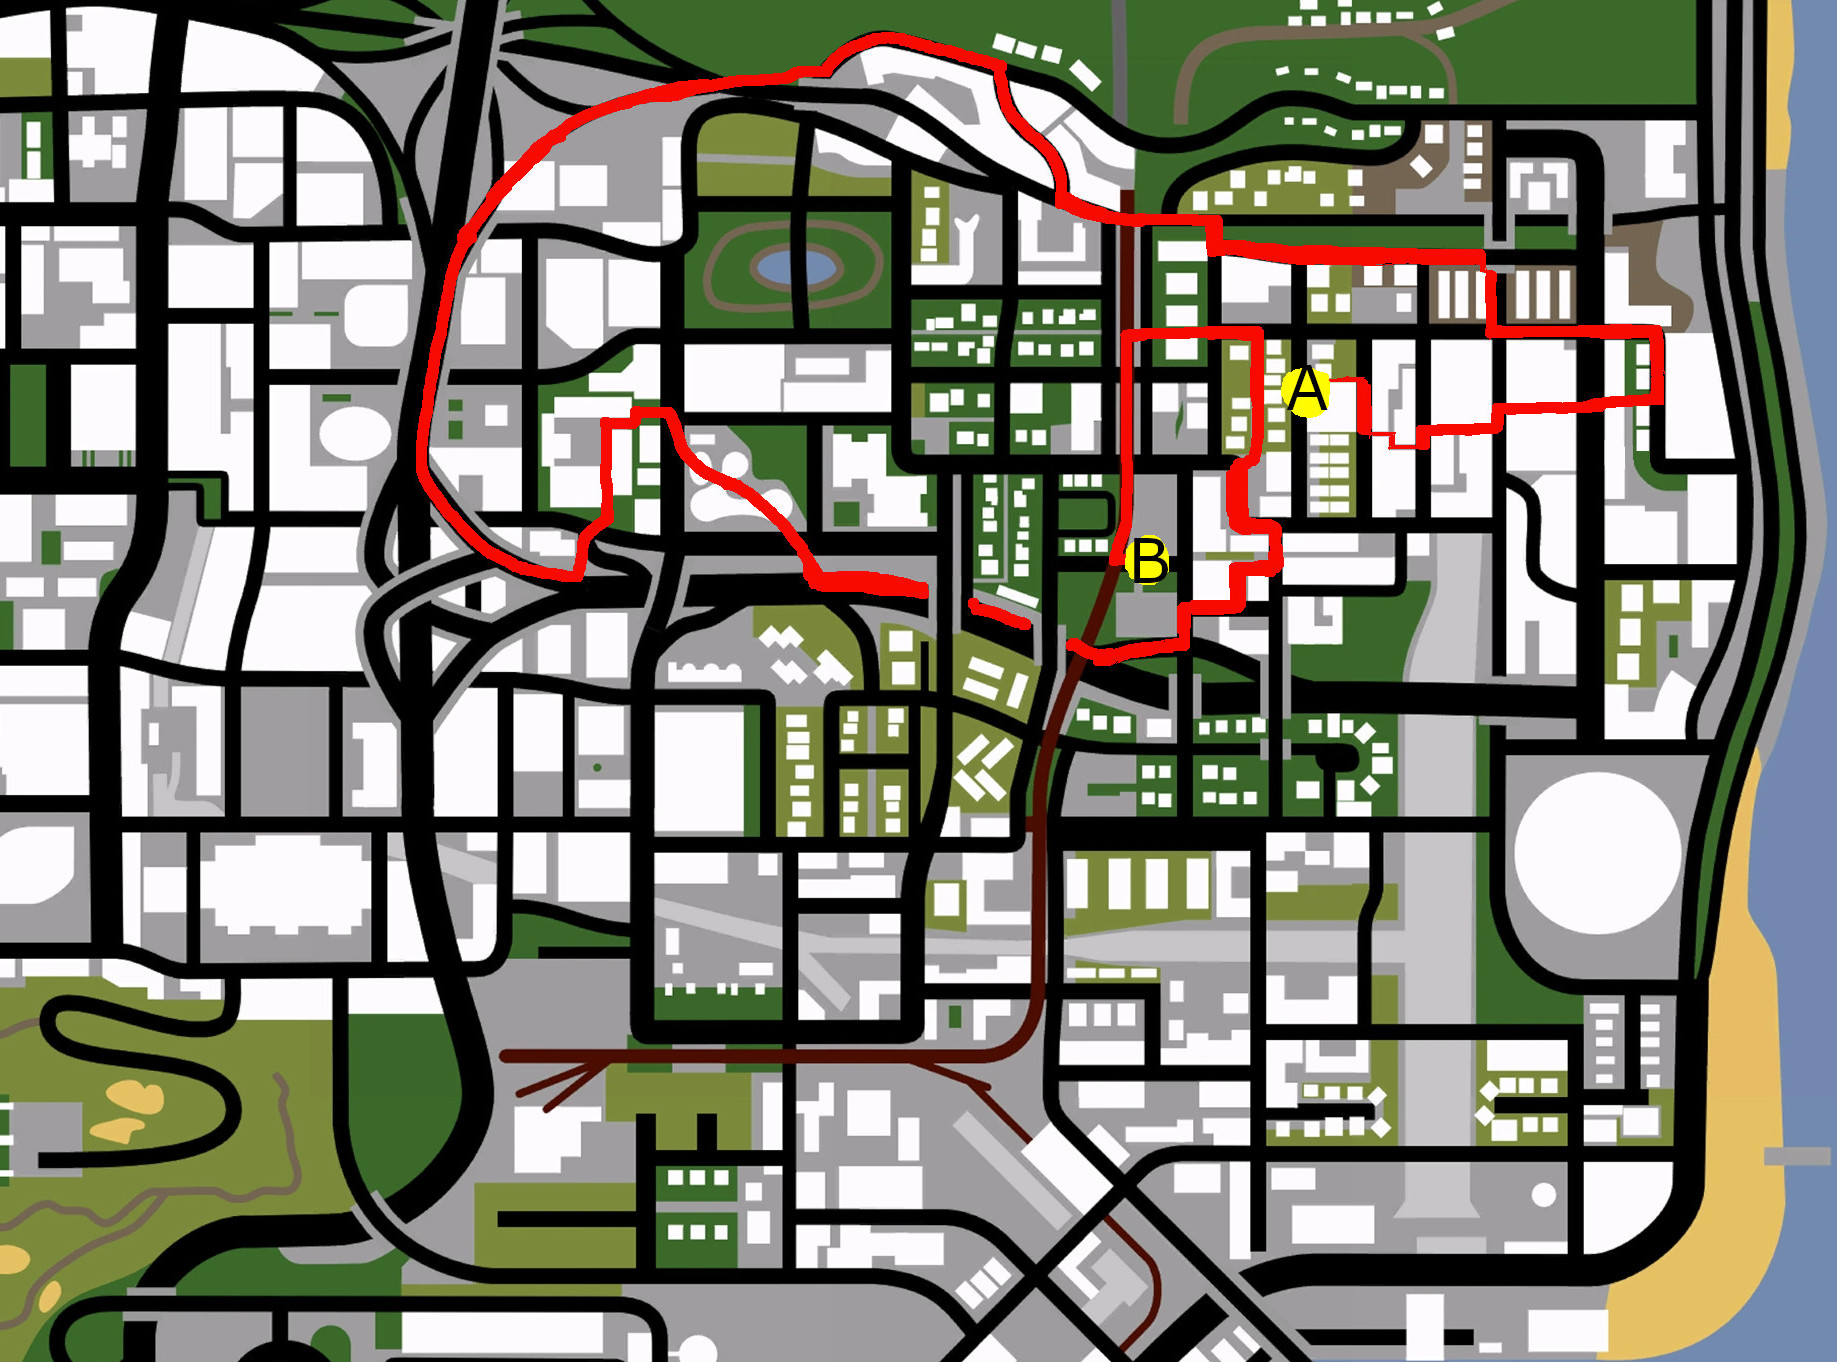 Freddy's bike route in GTA San Andreas